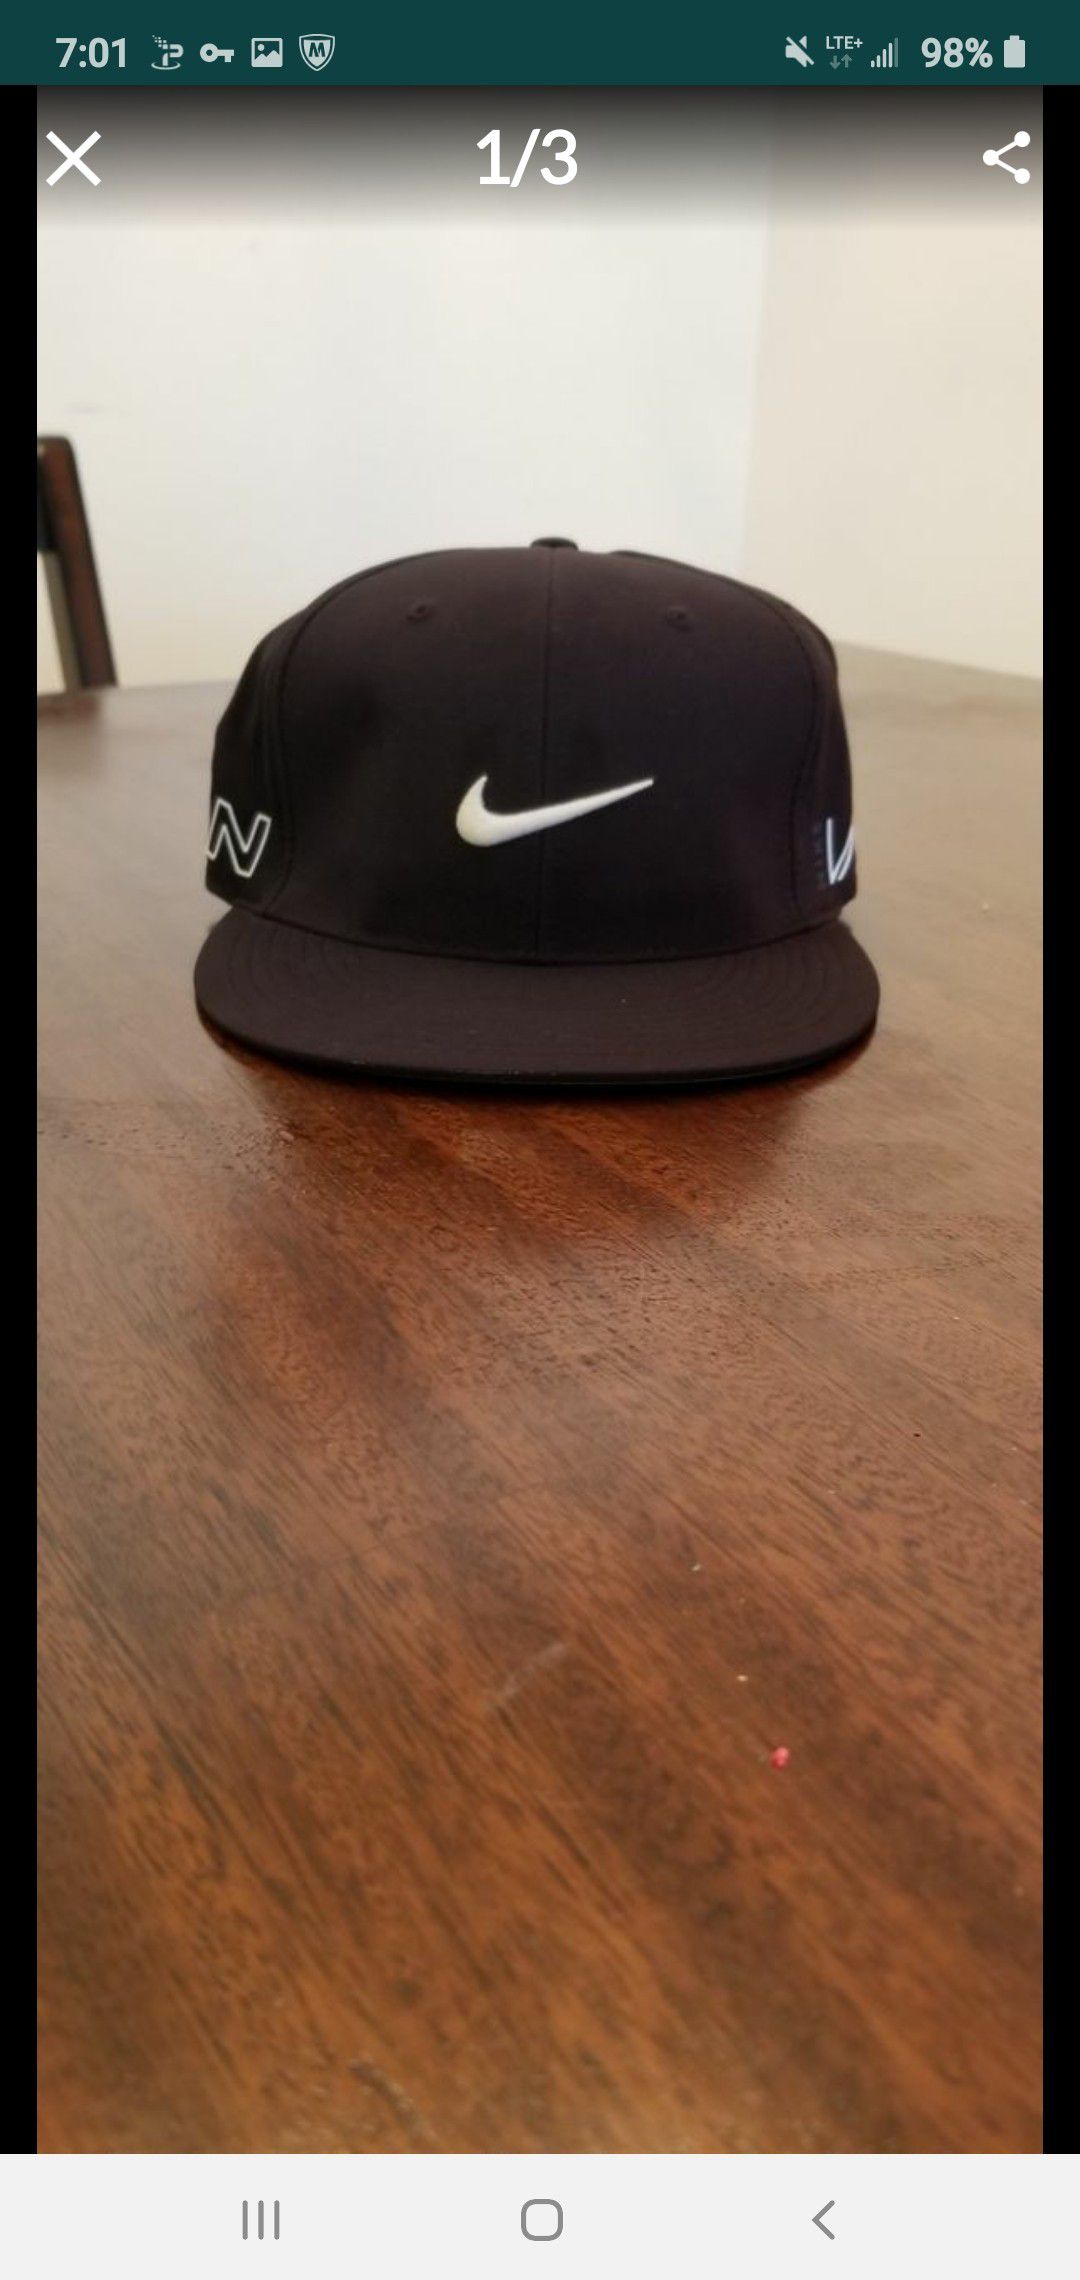 Nike vapor golf hat